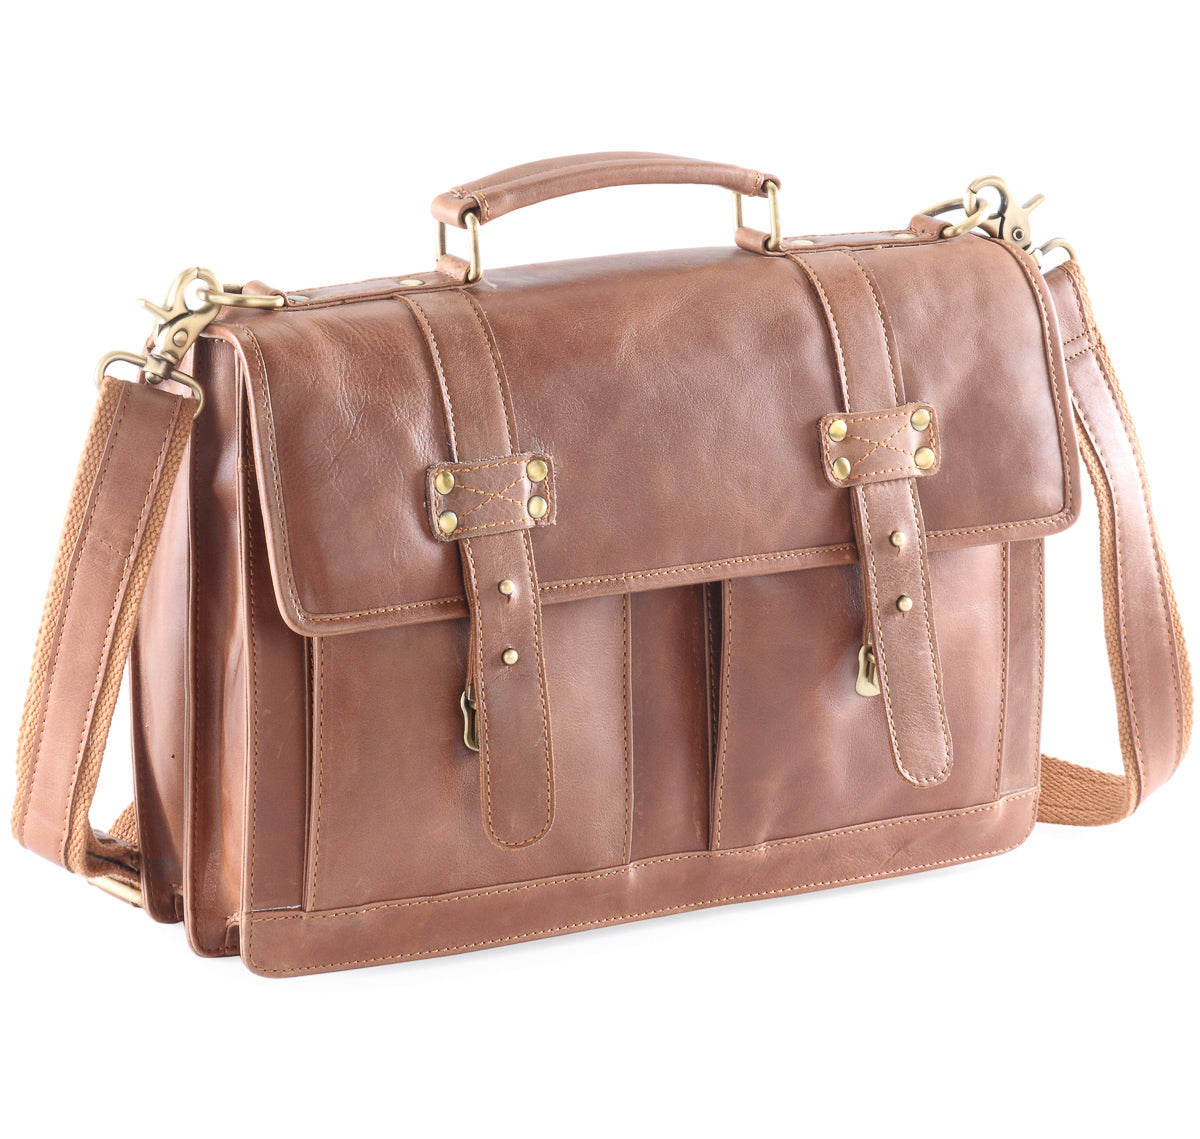 Frango distressed leather satchel / briefcase #UM51